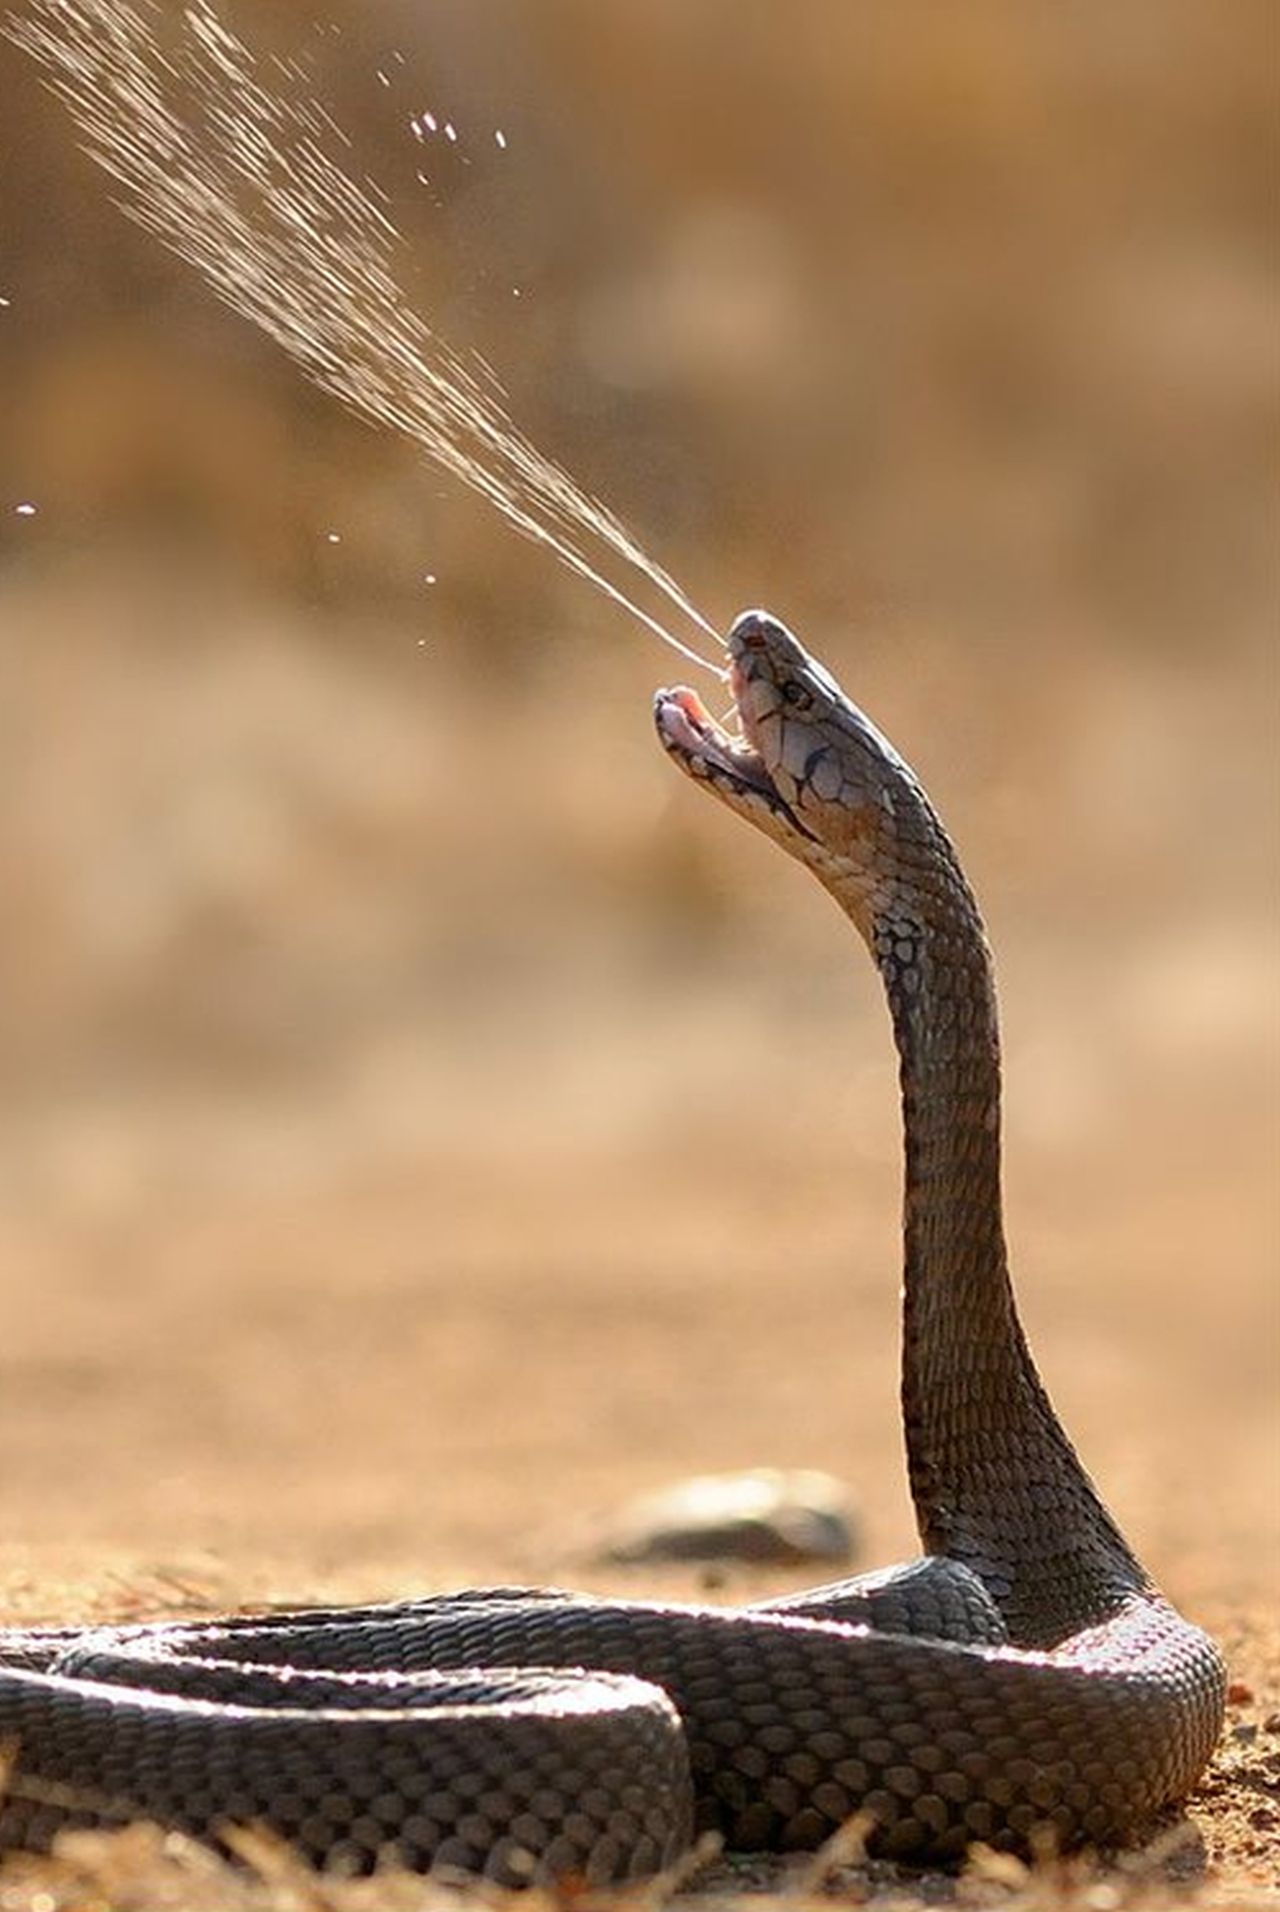 Snake venom worth Rs 1.3 crore seized in Odisha